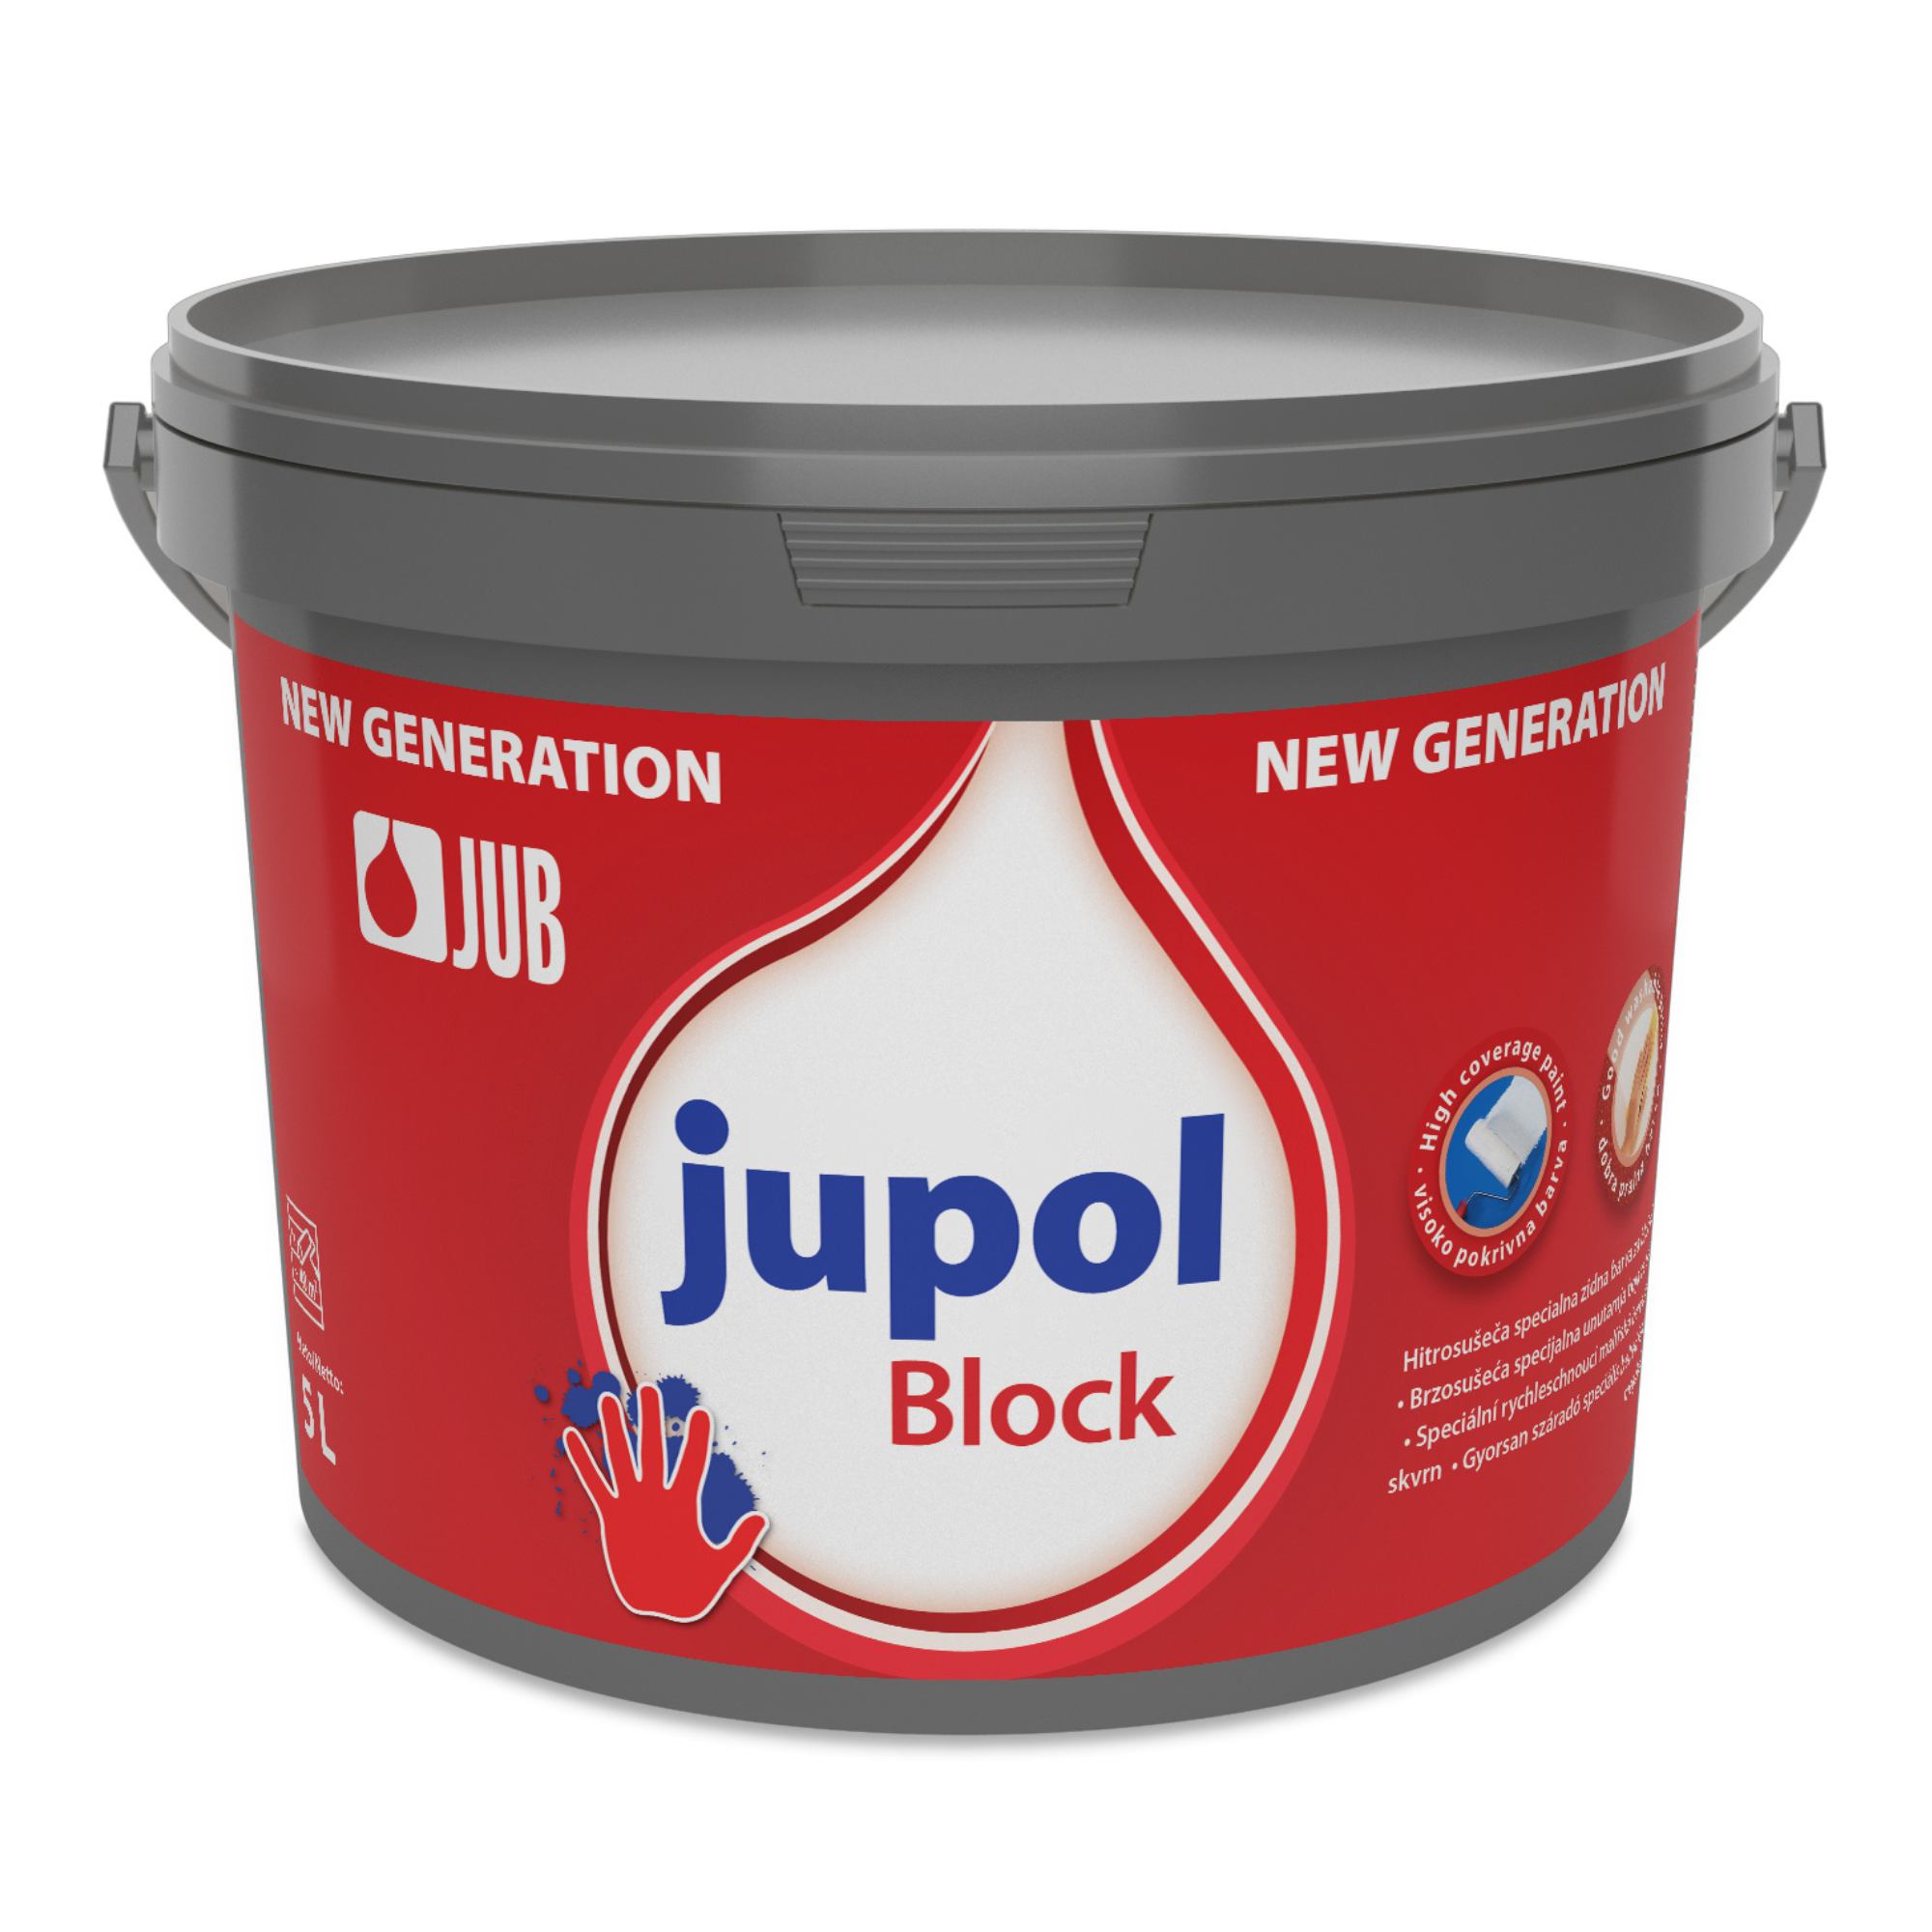 JUP JUPOL Block NEW GENERATION farba na blokovanie fľakov 5 l